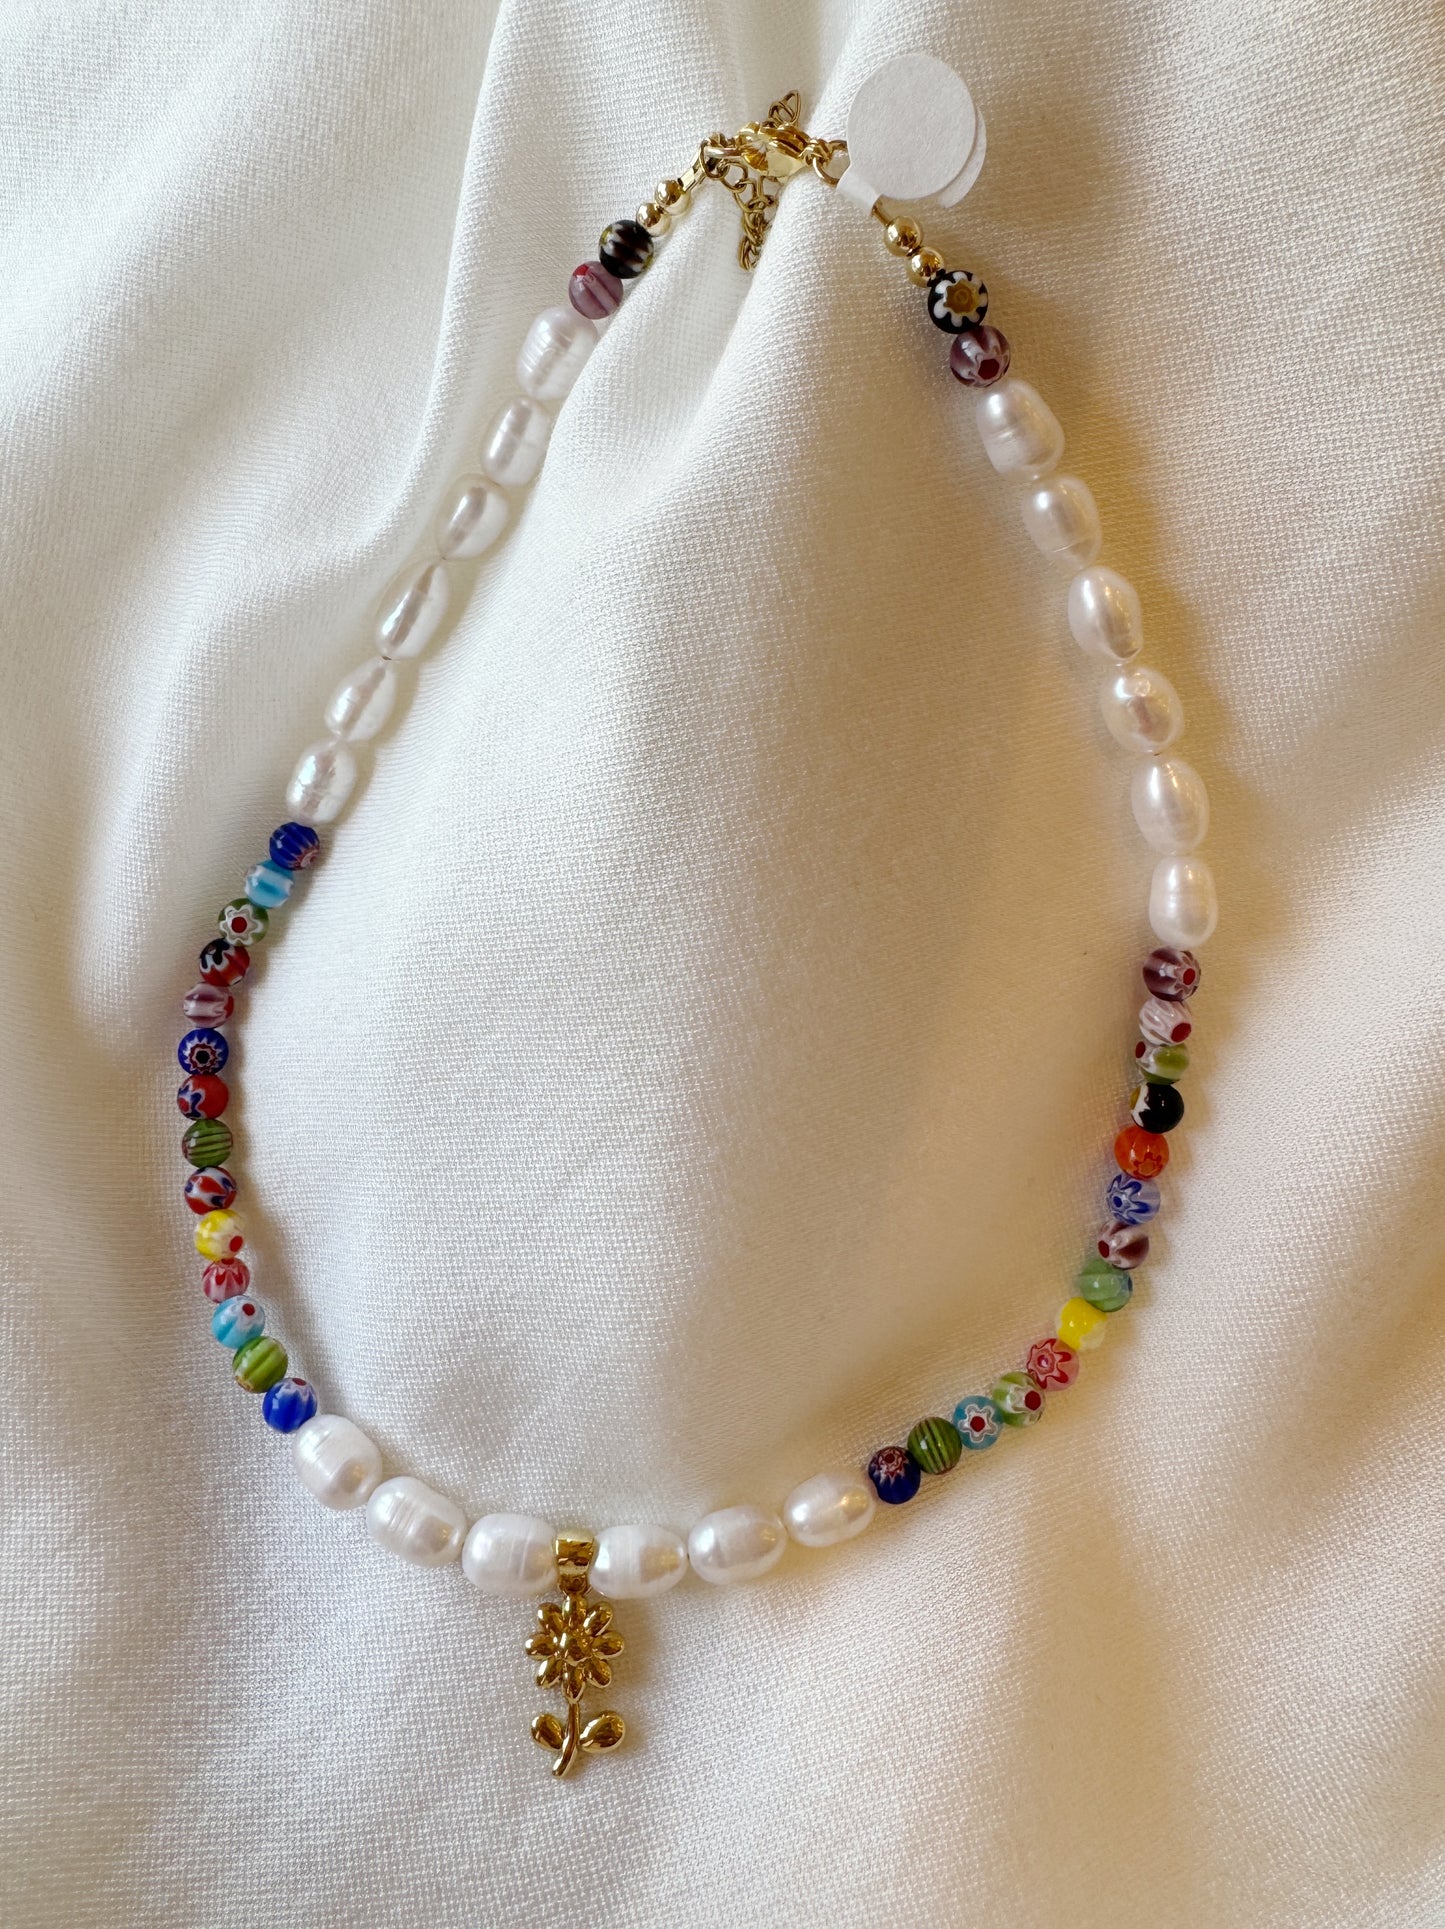 Pearl + Beads Choker No. 2 by Marisol